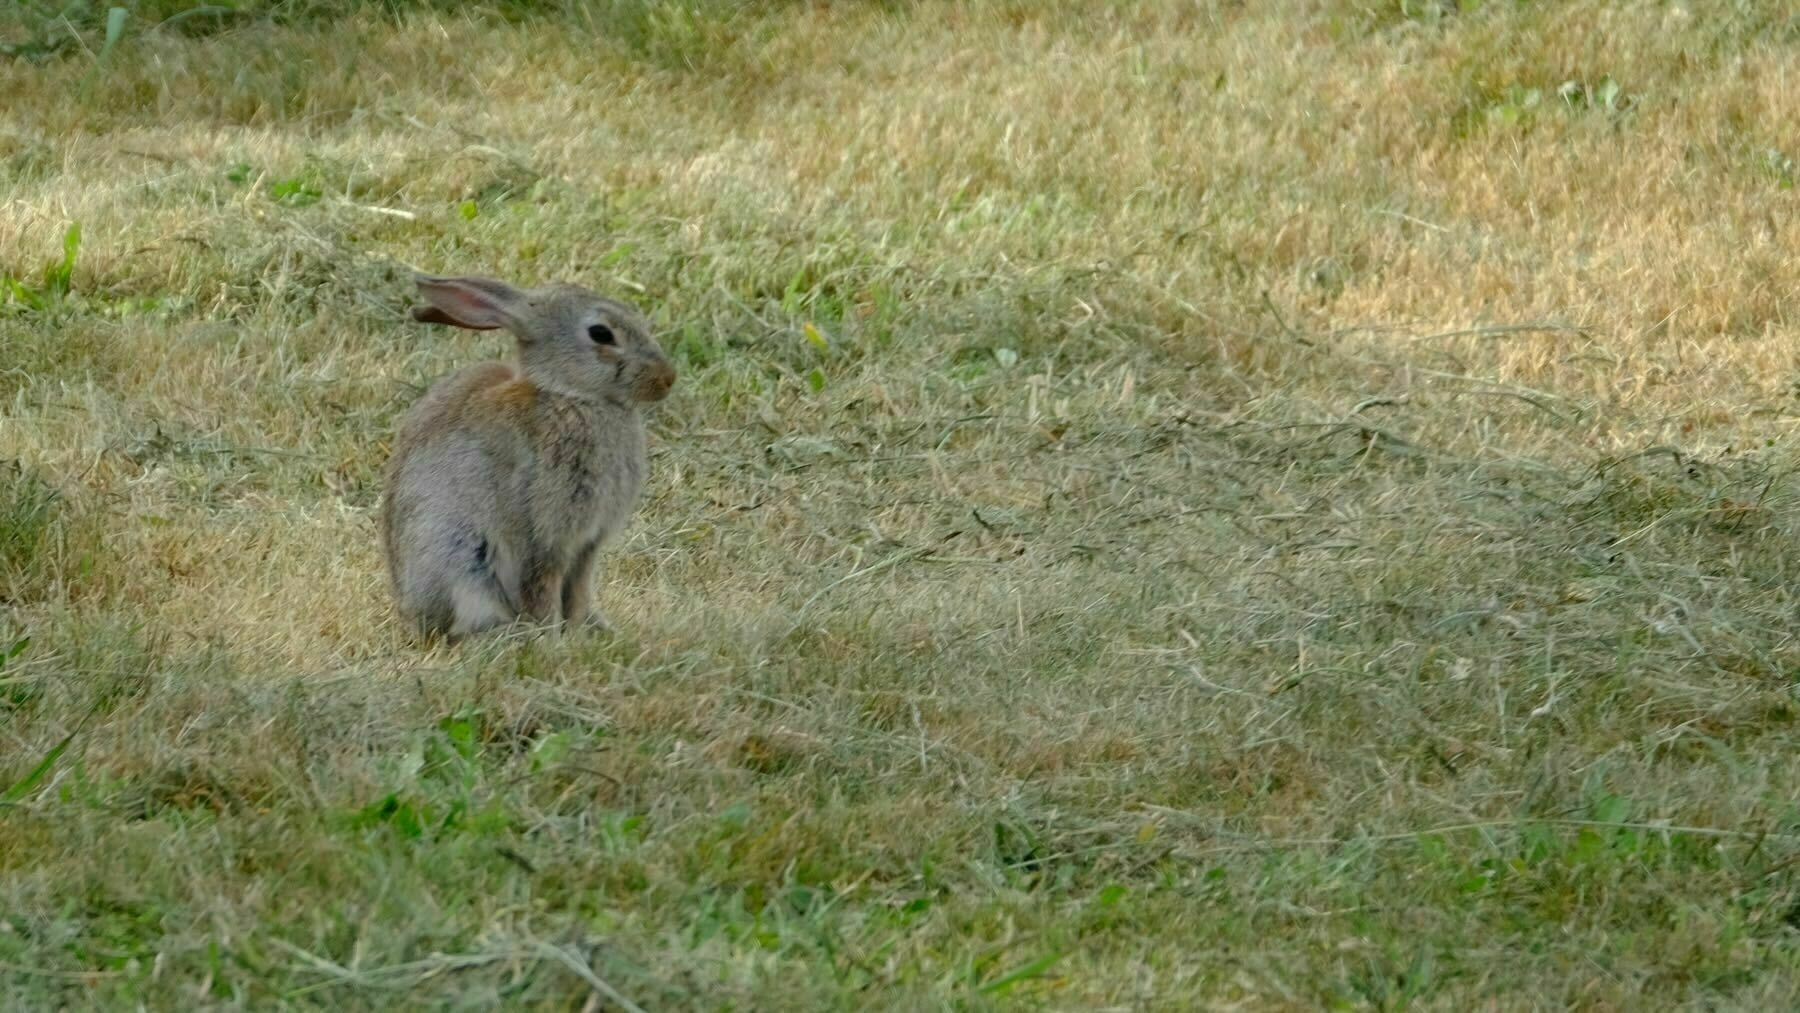 Rabbit on the grass. 